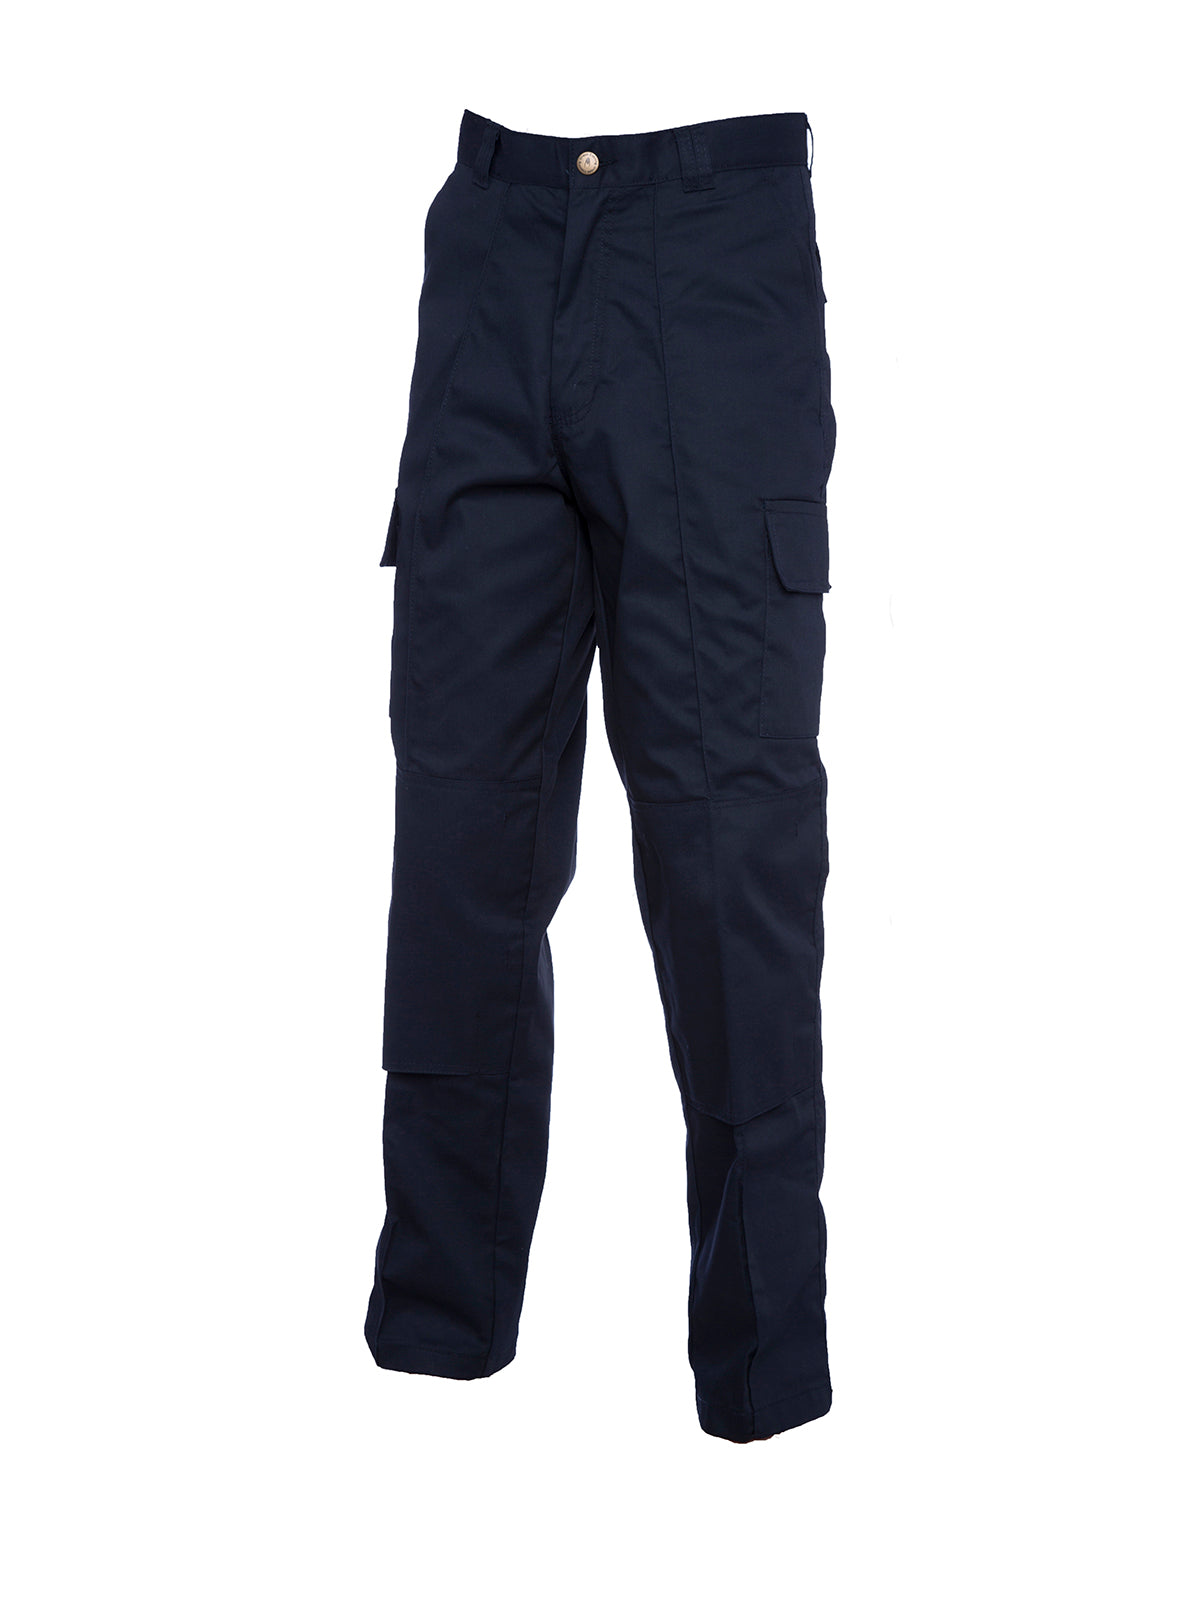 Uneek Cargo Trouser with Knee Pad Pockets Regular UC904R - Navy